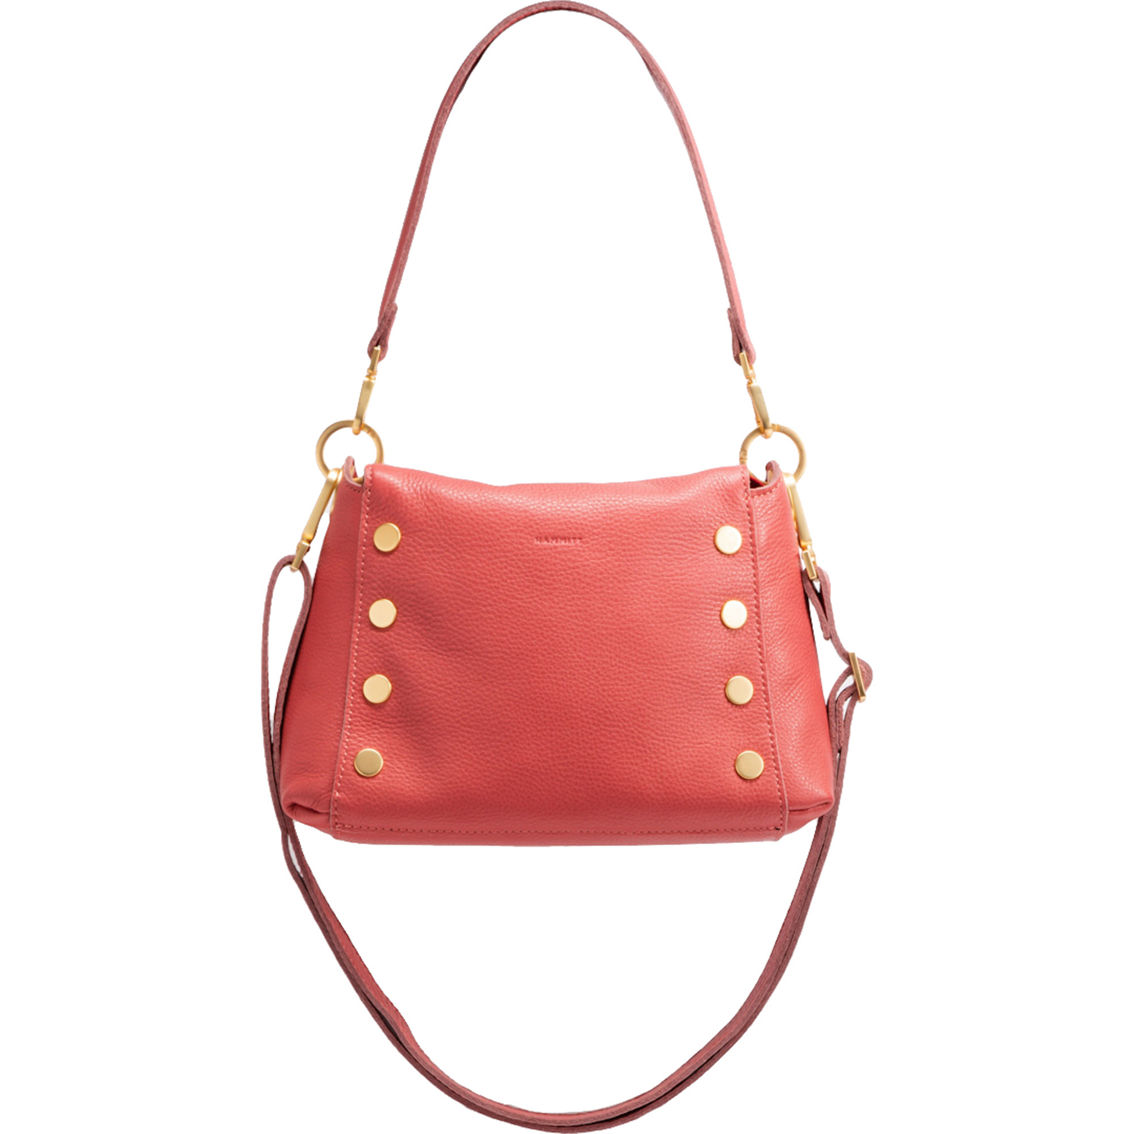 Hammitt Bryant Medium Shoulder Bag, Rouge Pink - Image 3 of 4